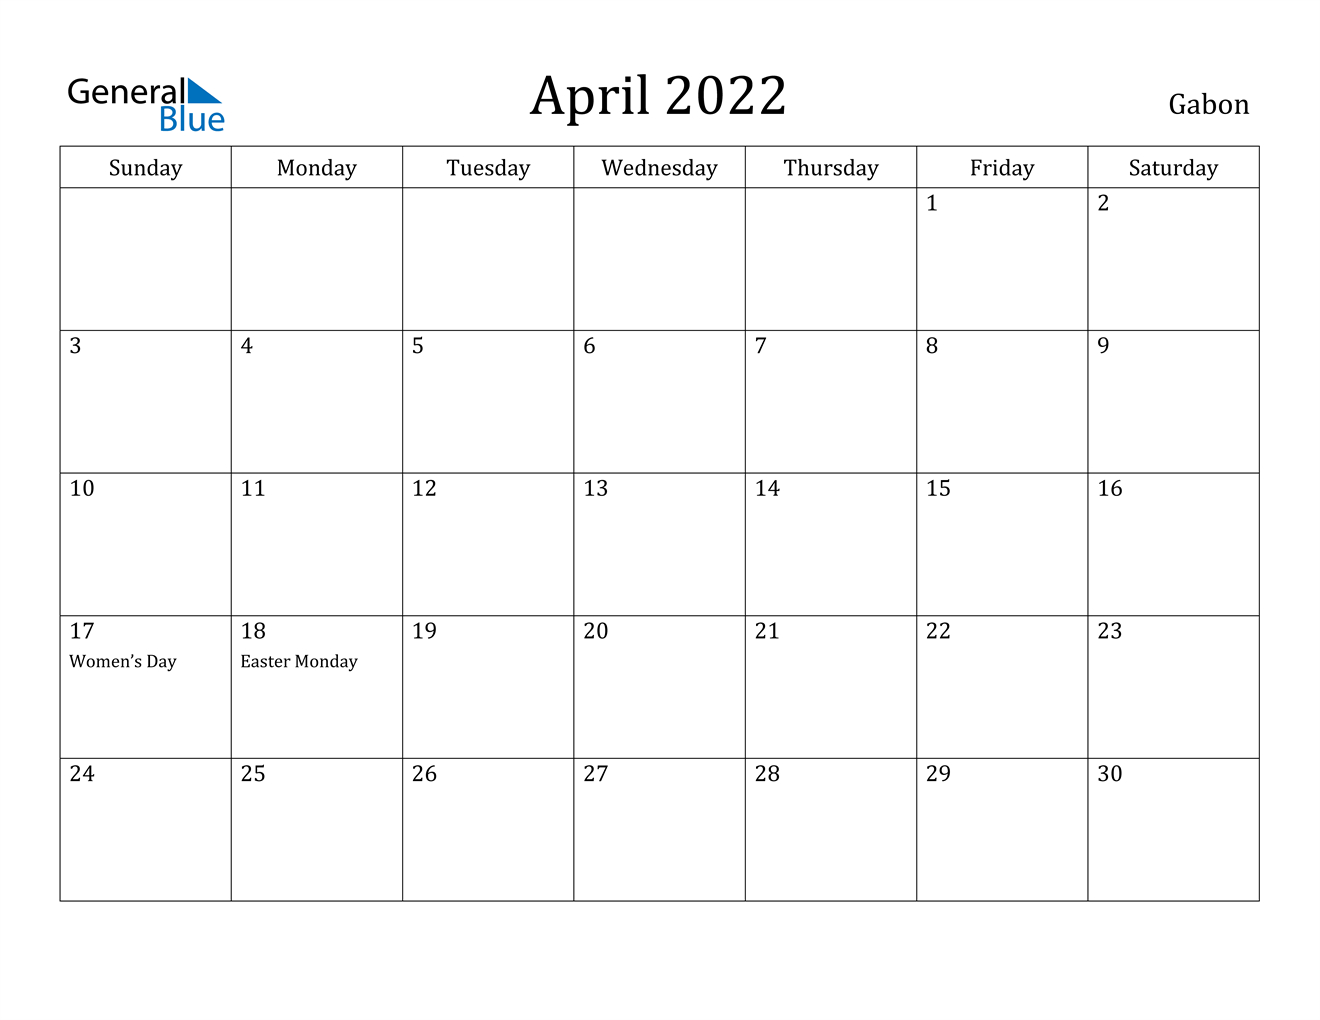 April 2022 Calendar - Gabon